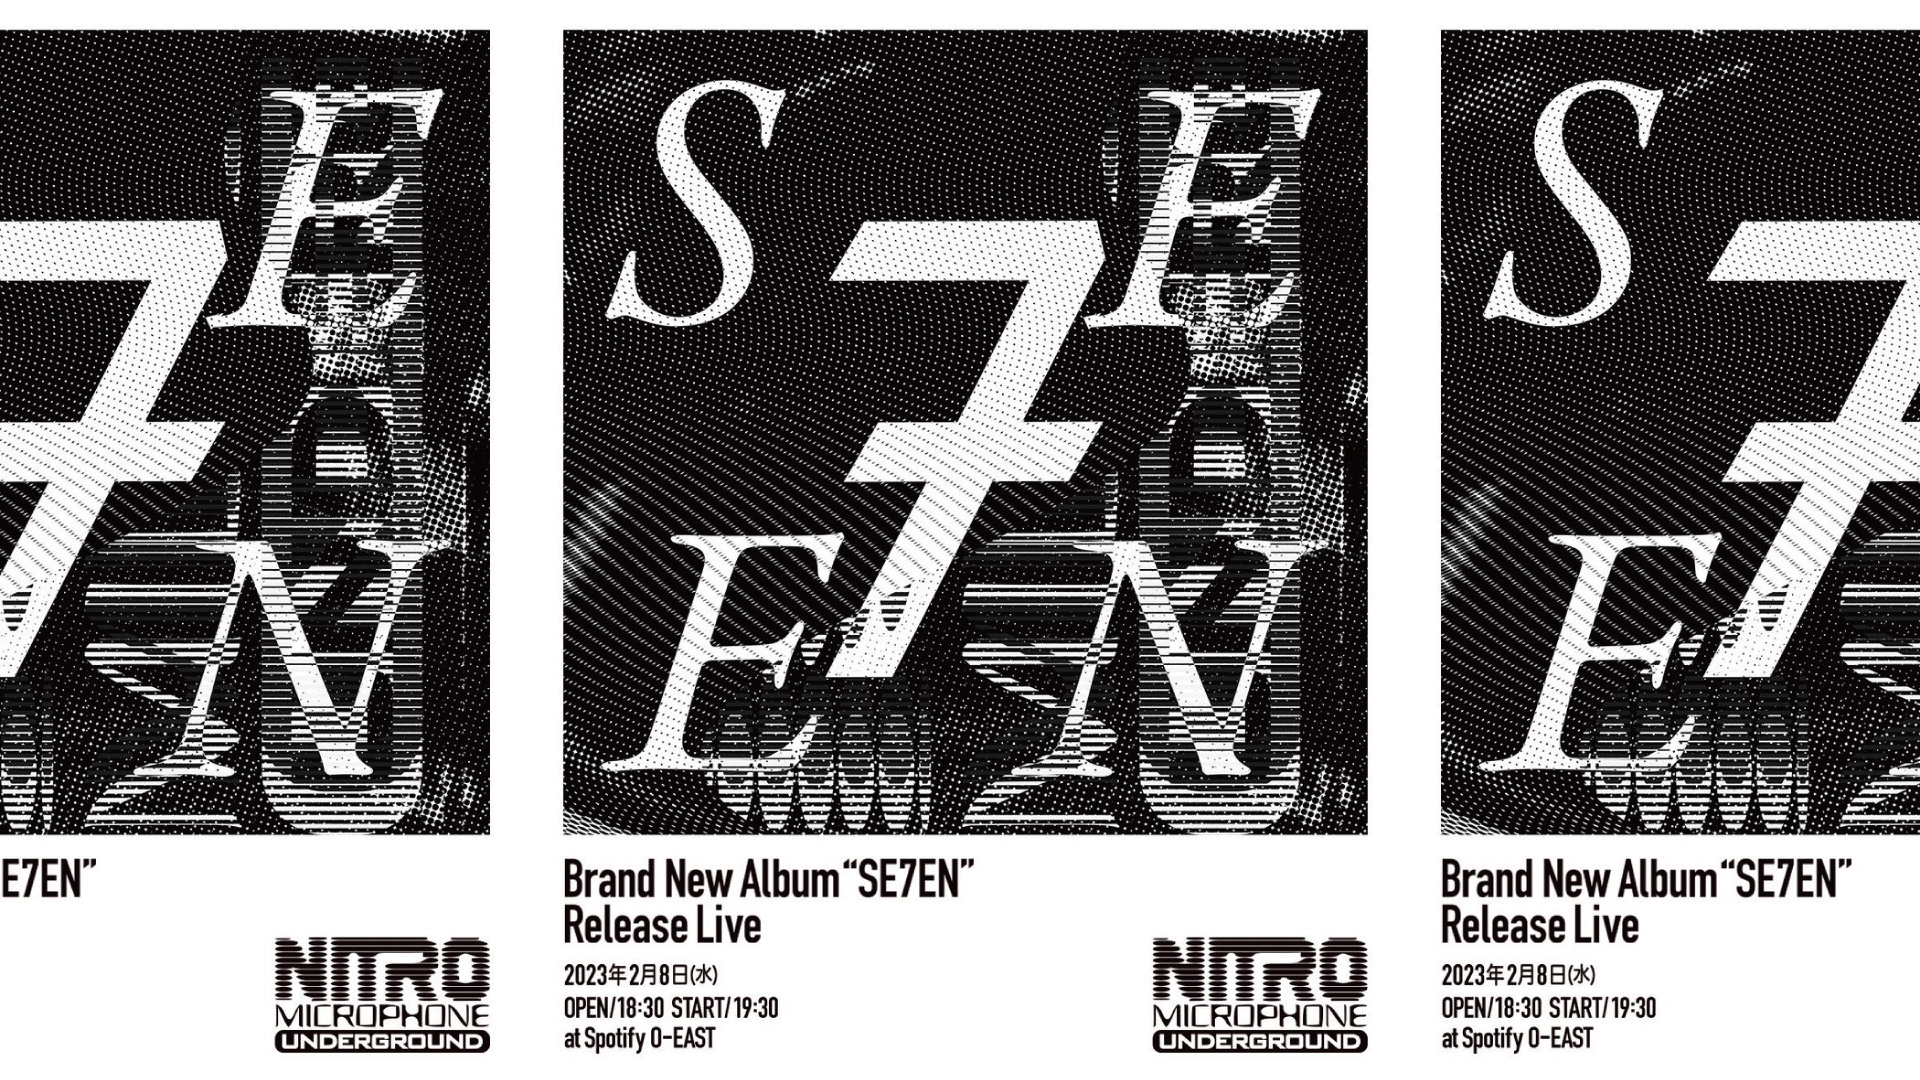 NITRO MICROPHONE UNDERGROUND Brand New Album “SE7EN” Release Live